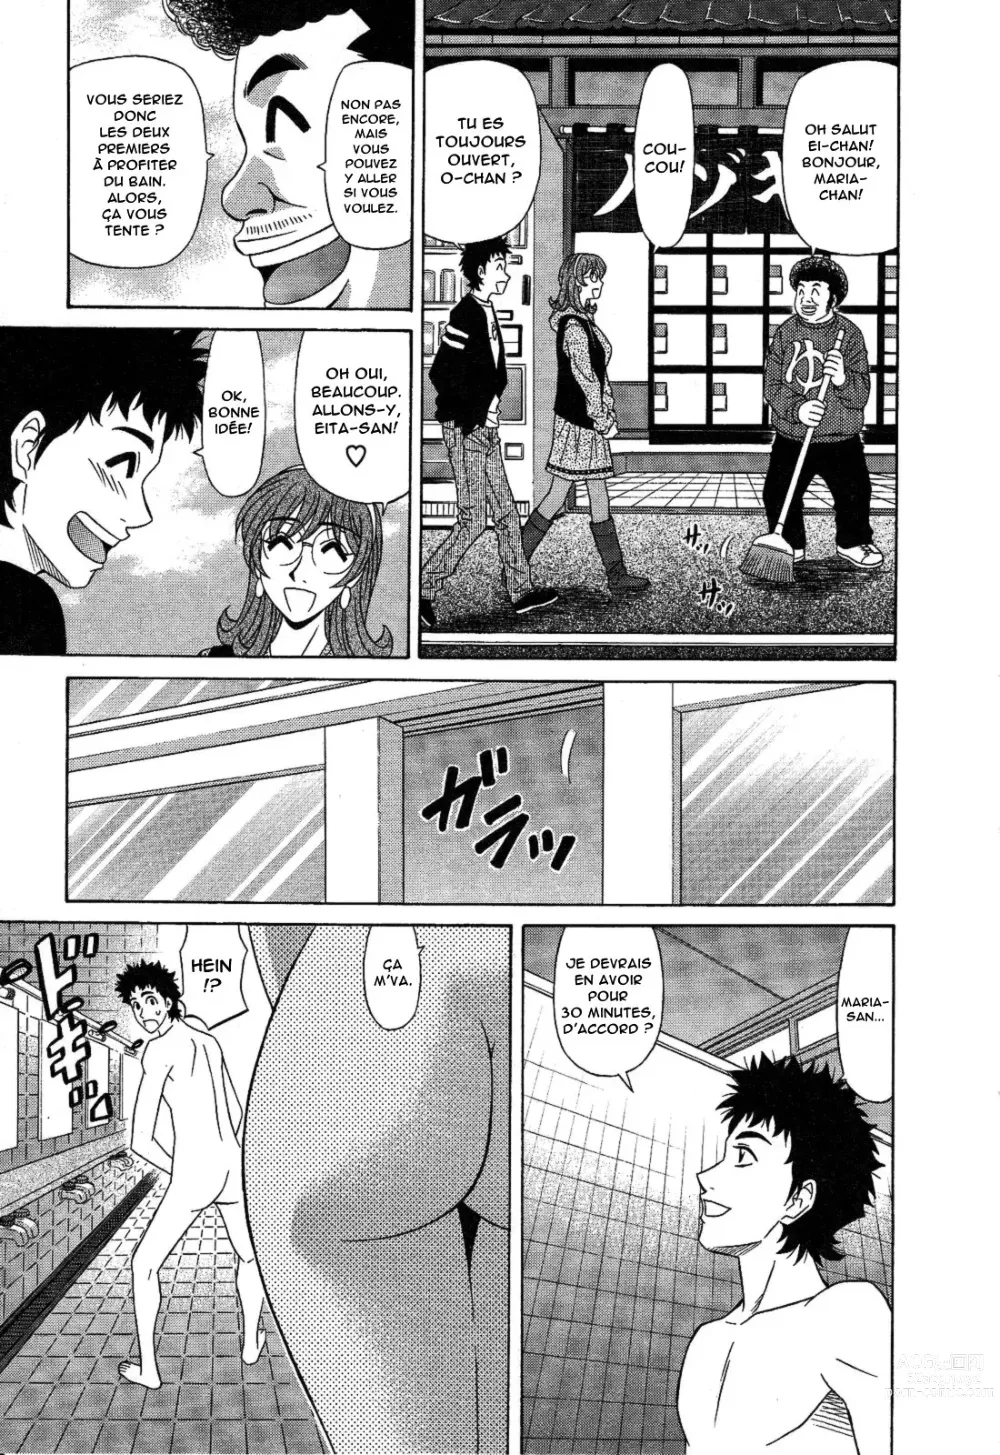 Page 178 of manga Dear Shitamachi Princess Vol. 2